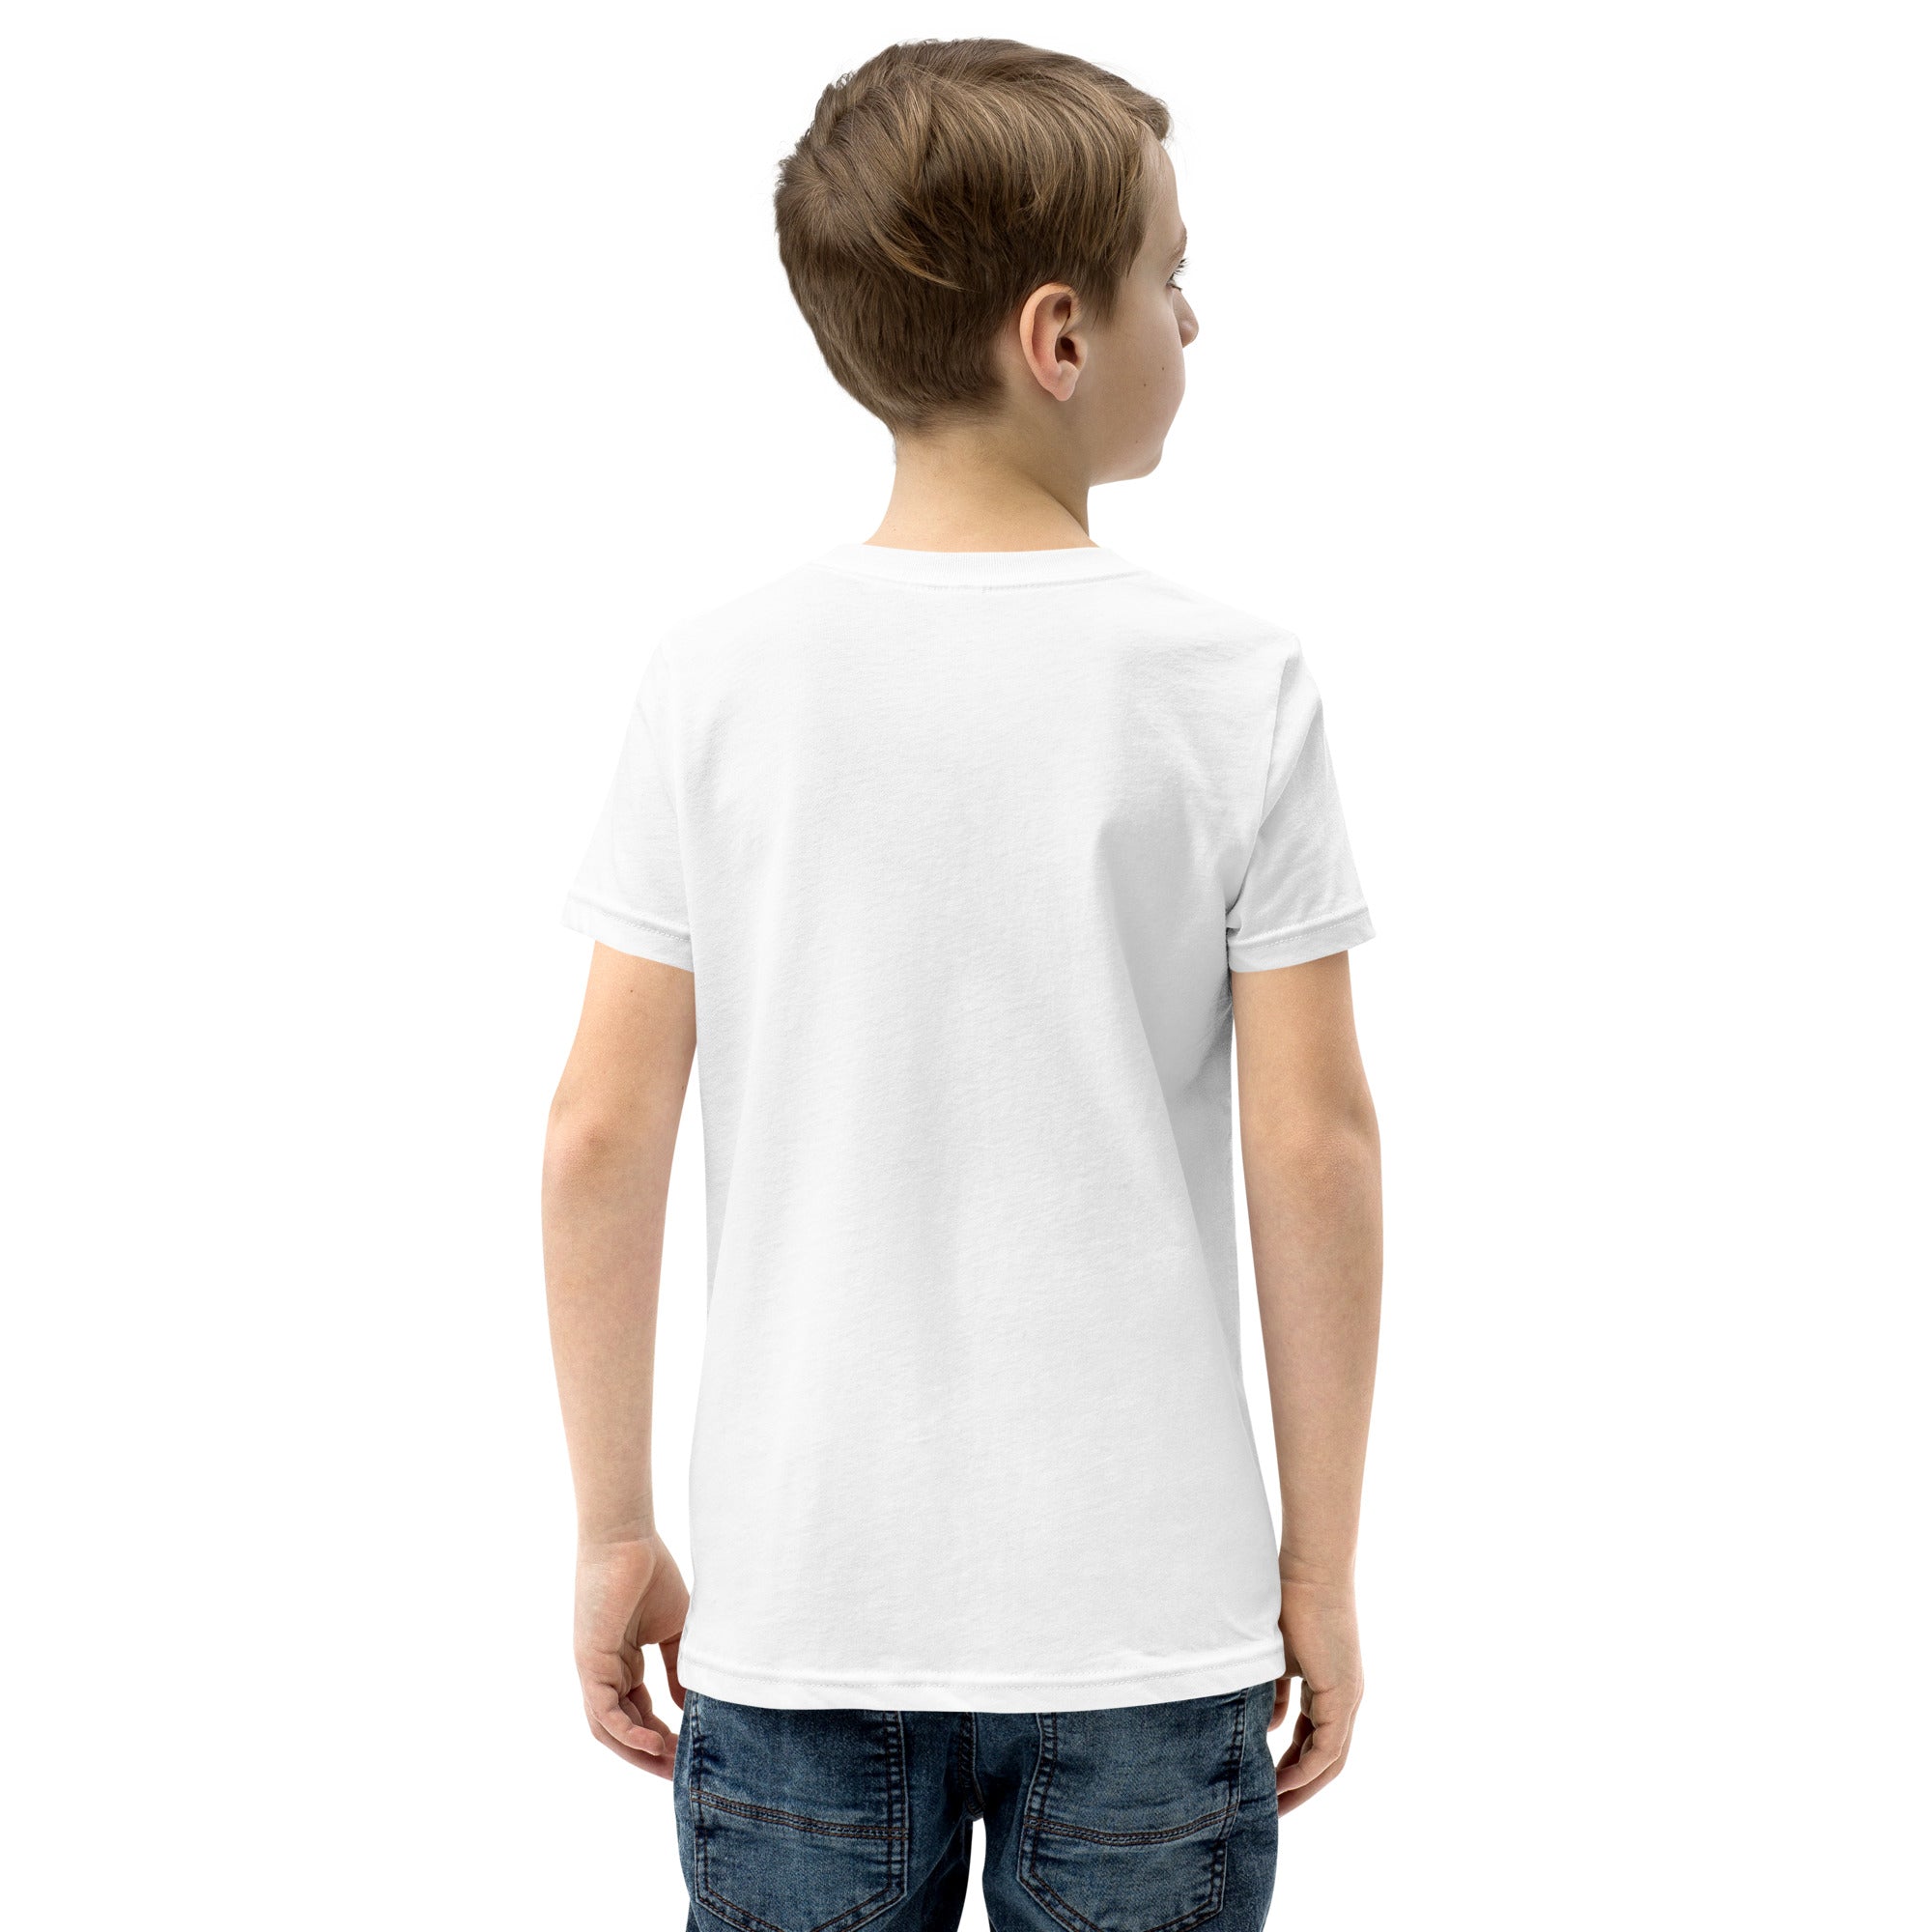 SiouxFalls SW - White - R/B Youth Short Sleeve T-Shirt